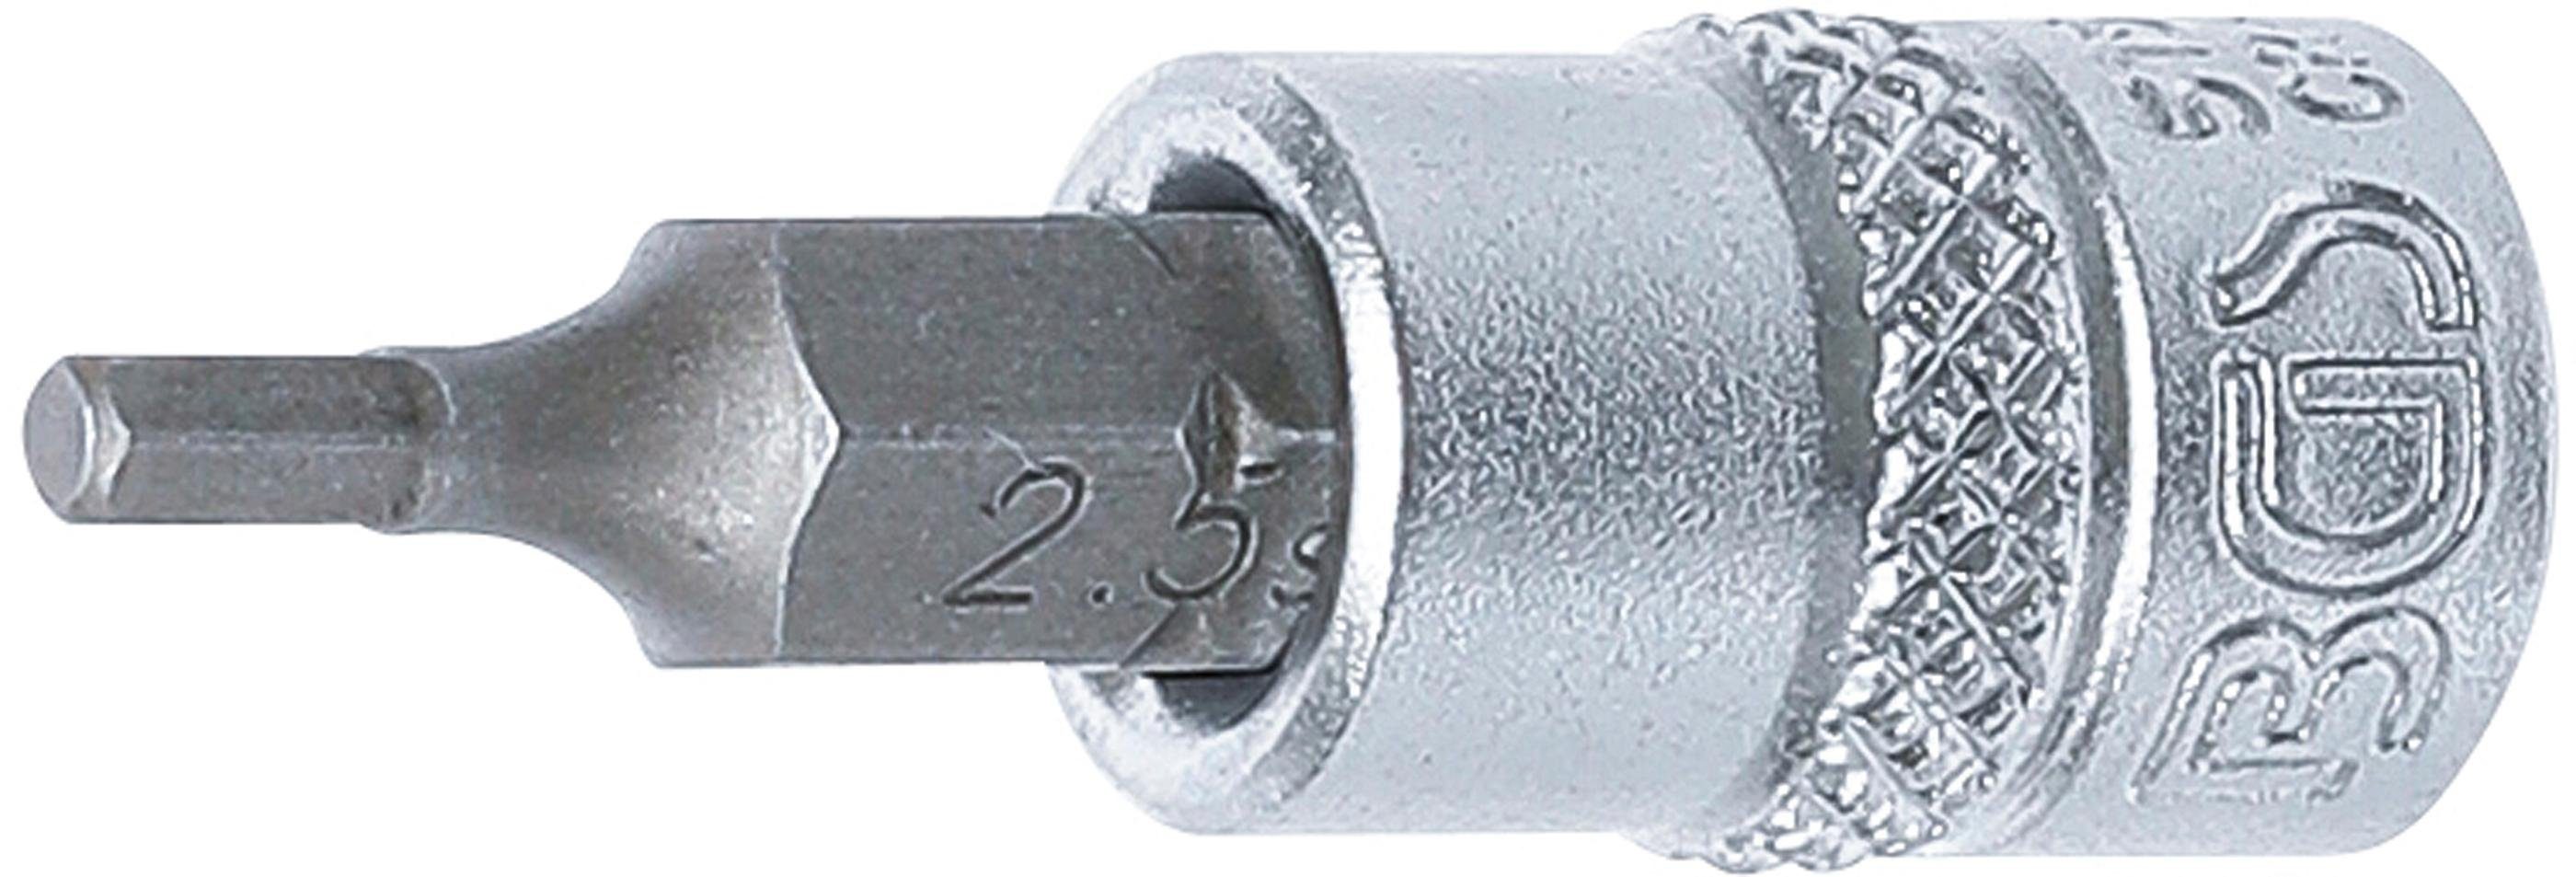 BGS technic Sechskant-Bit Bit-Einsatz, Antrieb Innenvierkant 6,3 mm (1/4), Innensechskant 2,5 mm